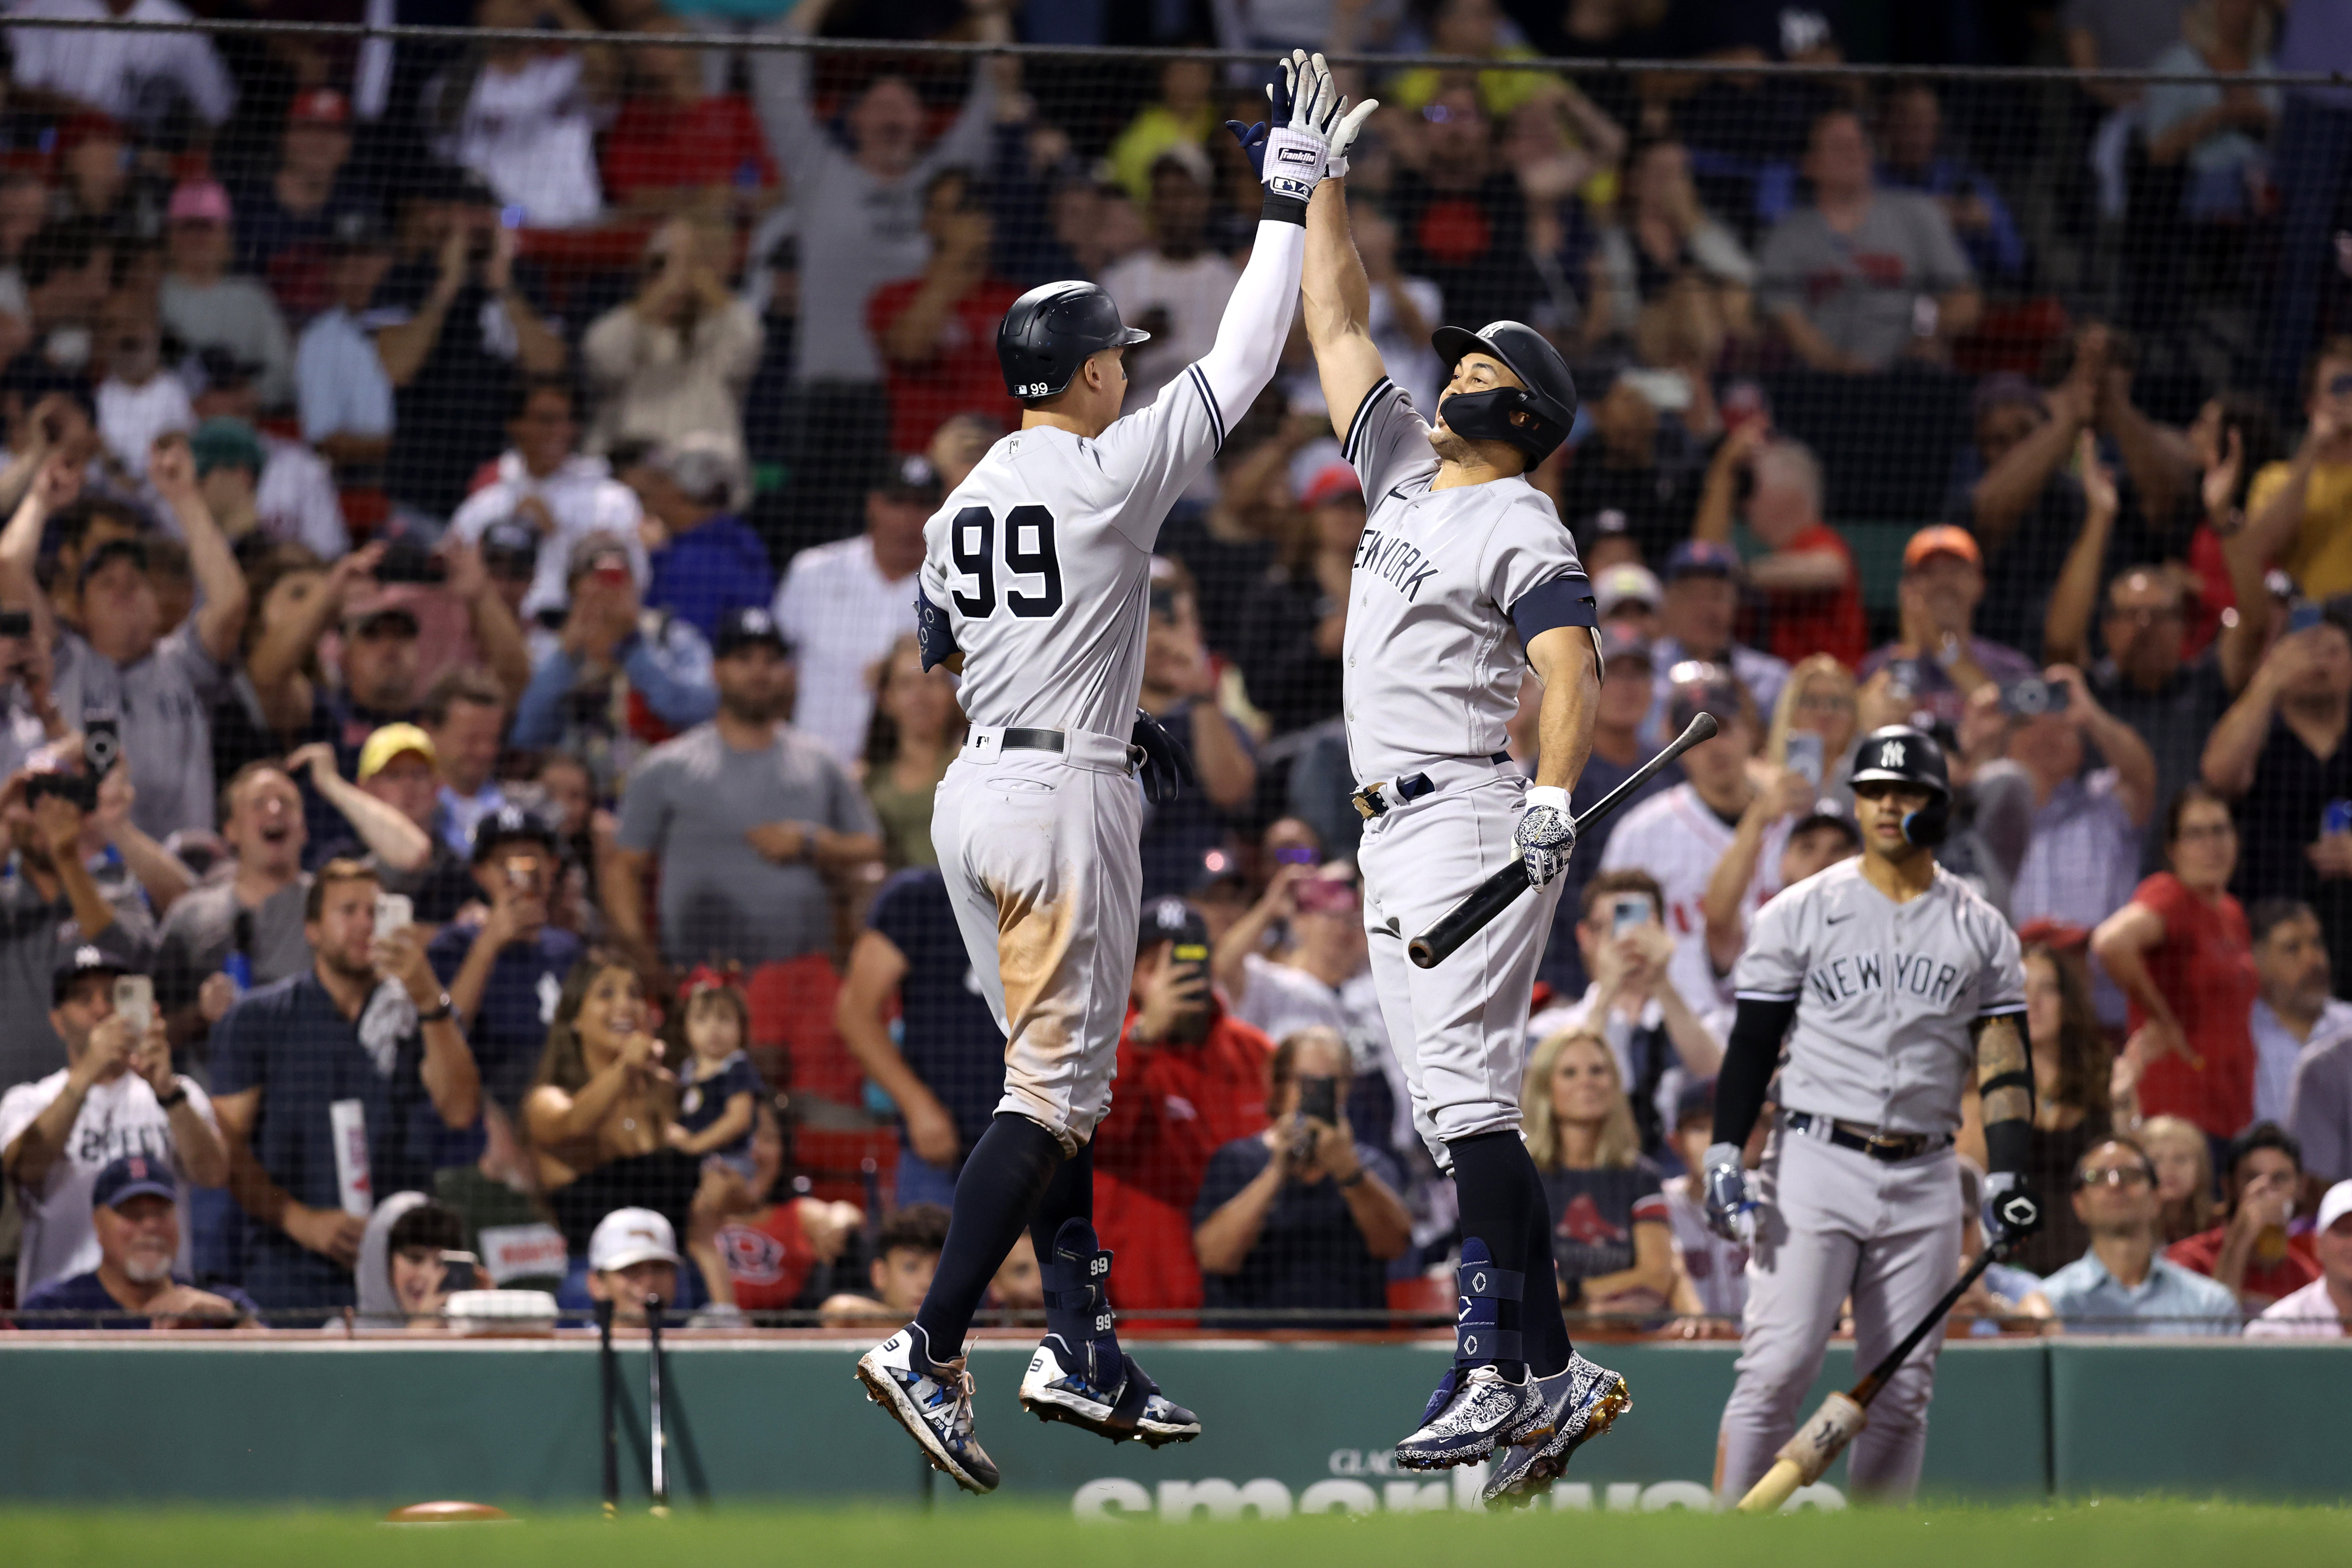 Judge homers twice, Yankees overcome 6-run deficit, beat Rays 9-8